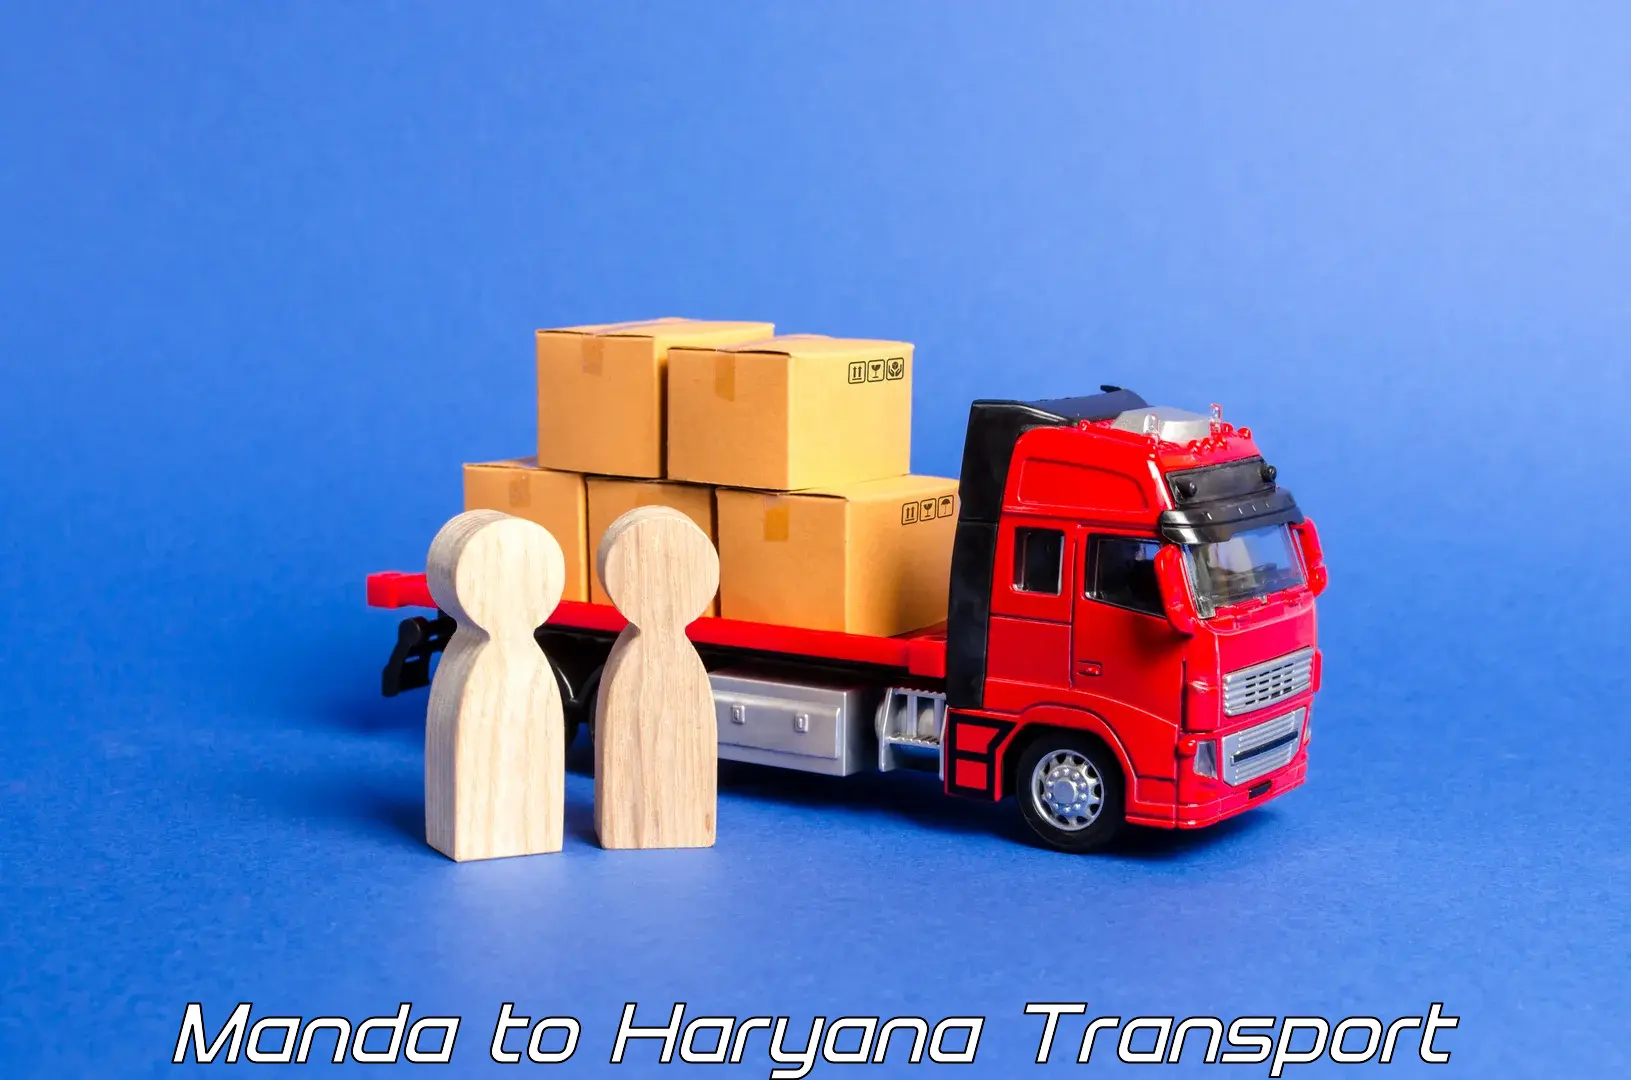 Shipping partner Manda to NCR Haryana